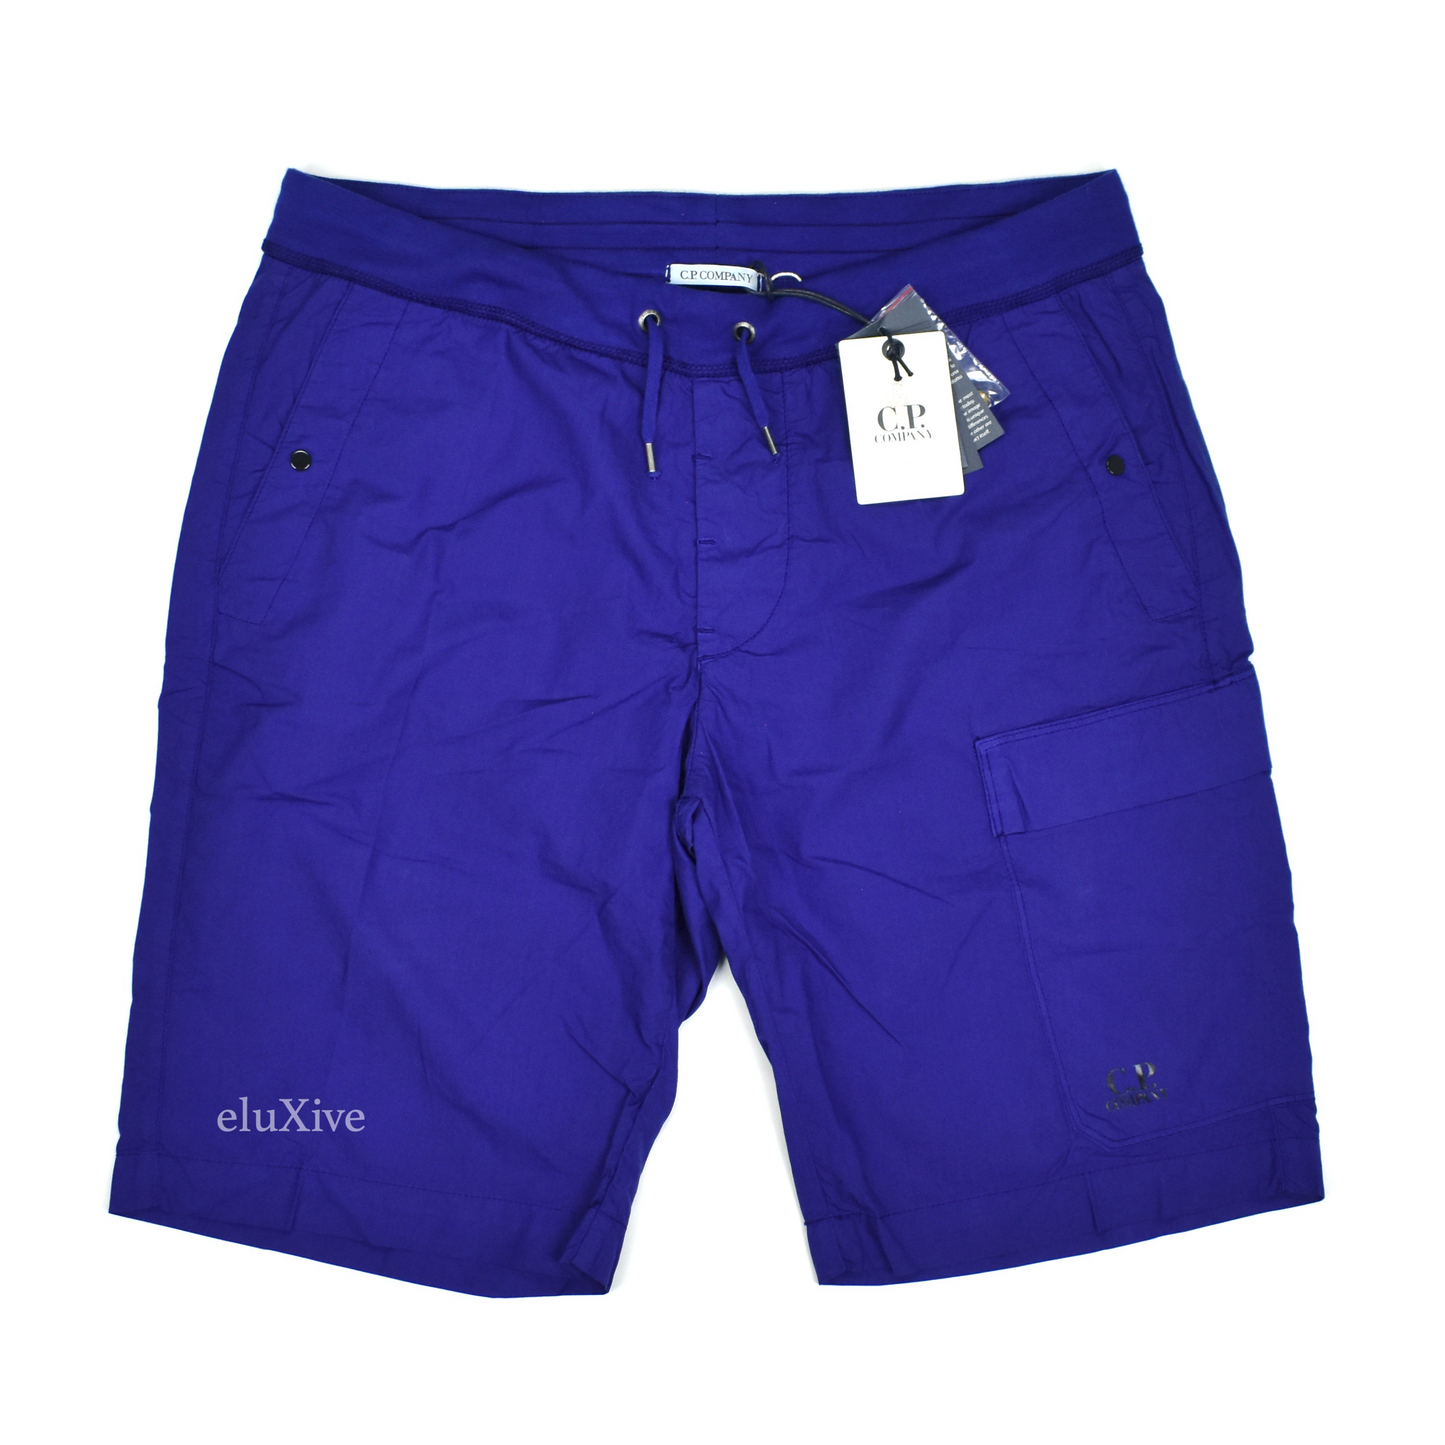 C.P. Company - Royal Blue Lightweight Cotton Shorts